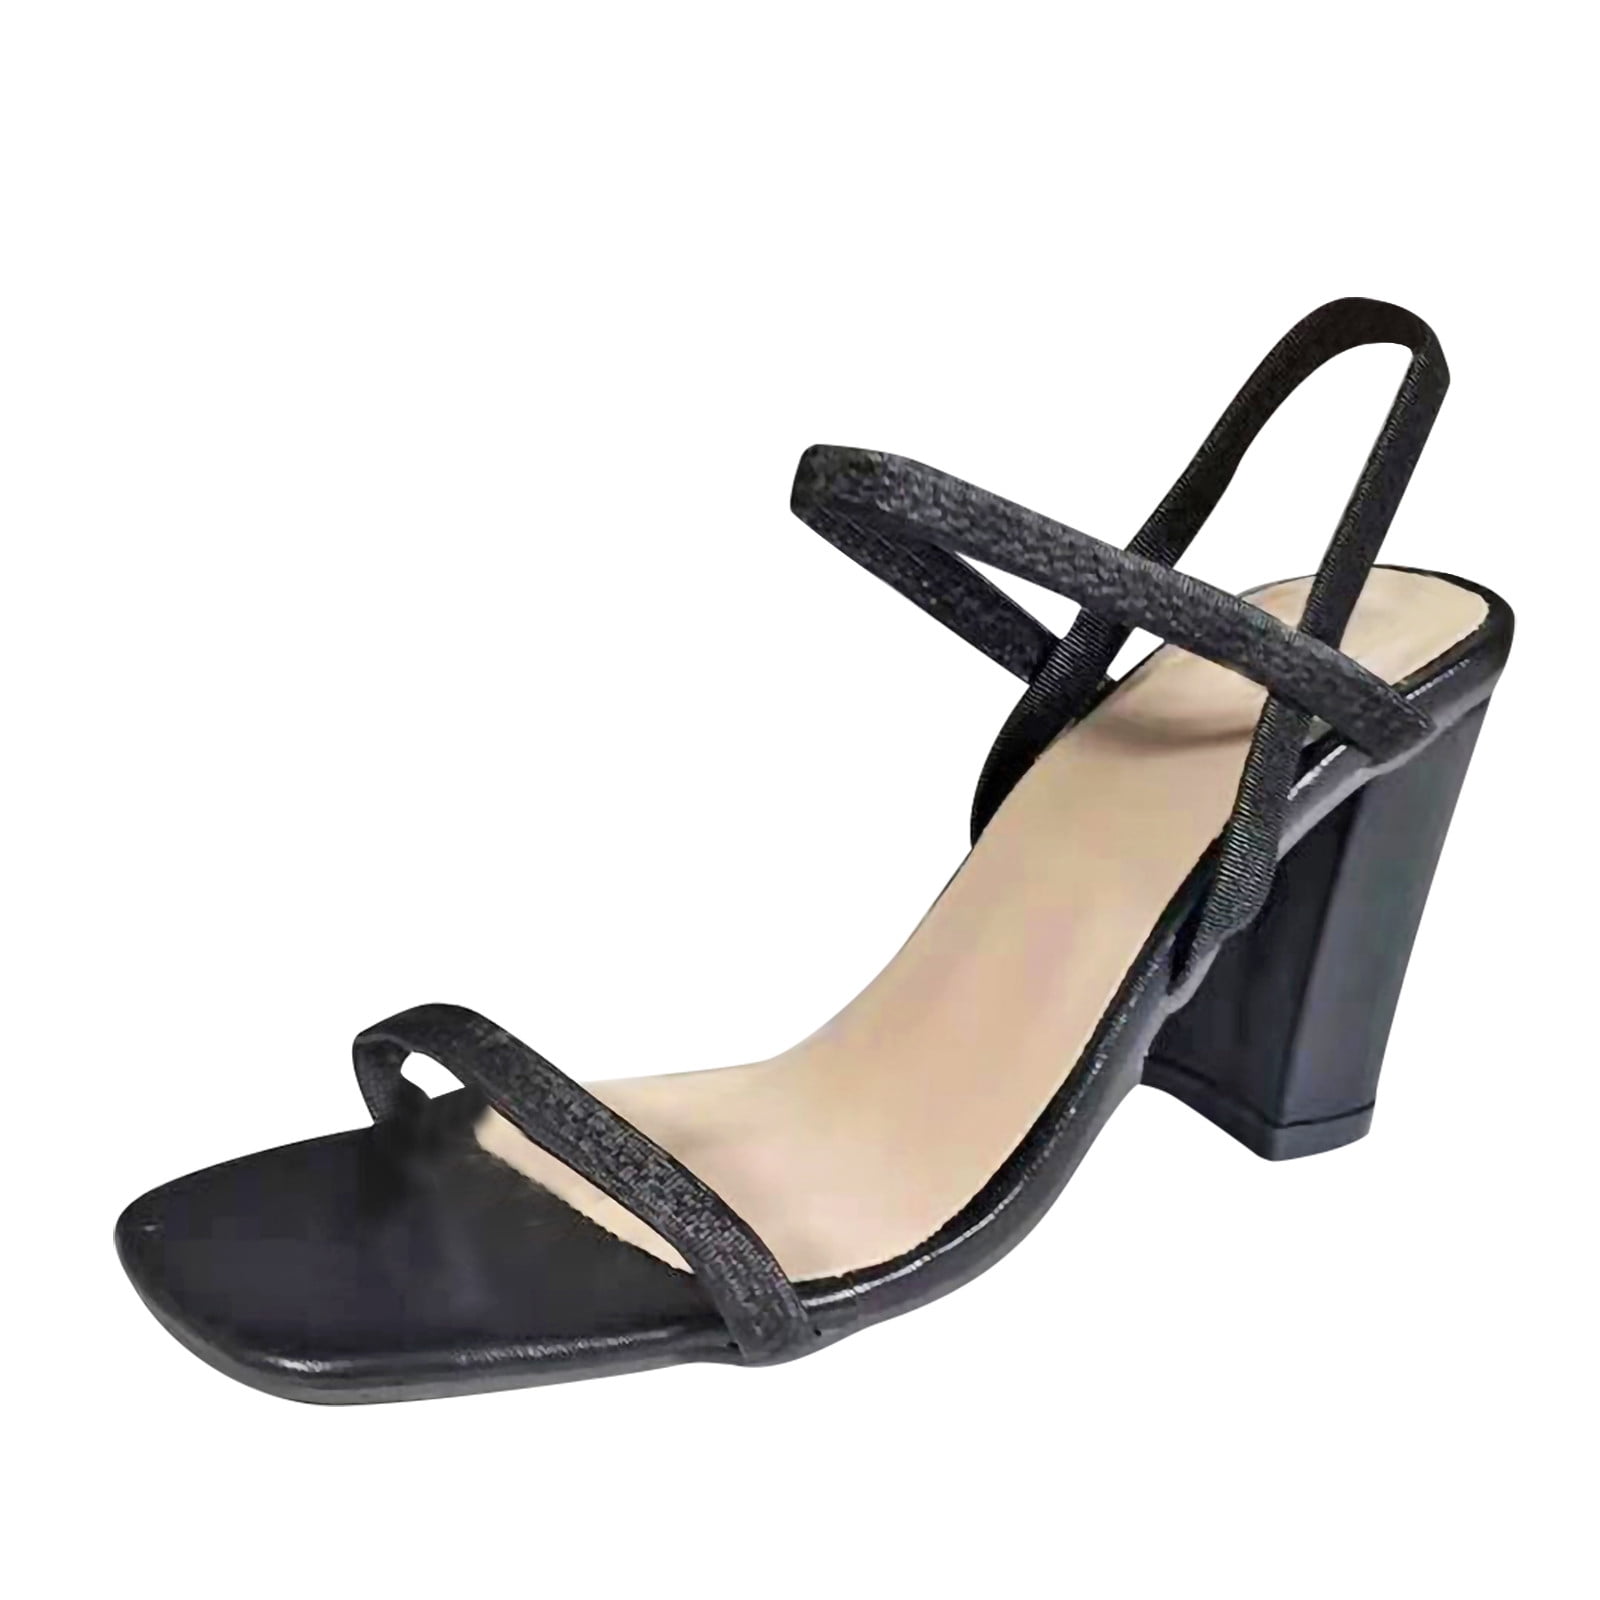 Shop New Look Wide Fit Black Heel Sandals for Women up to 30% Off |  DealDoodle